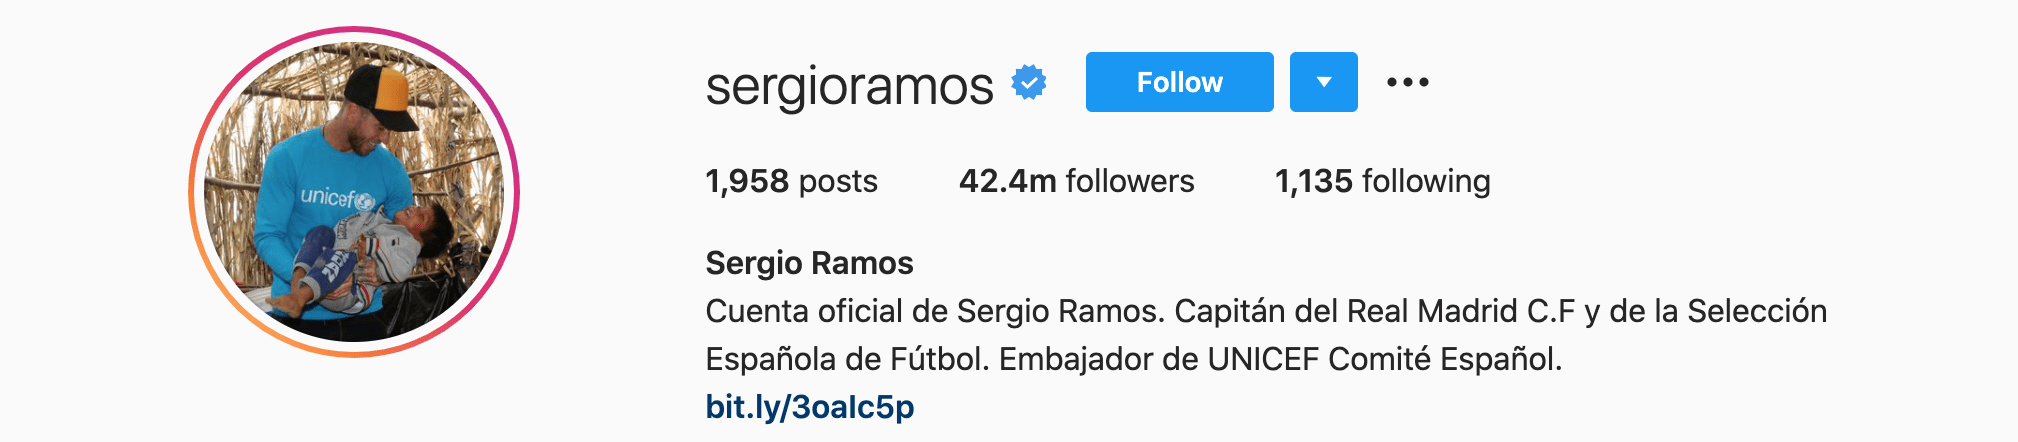 Top Instagram Influencers - SERGIO RAMOS